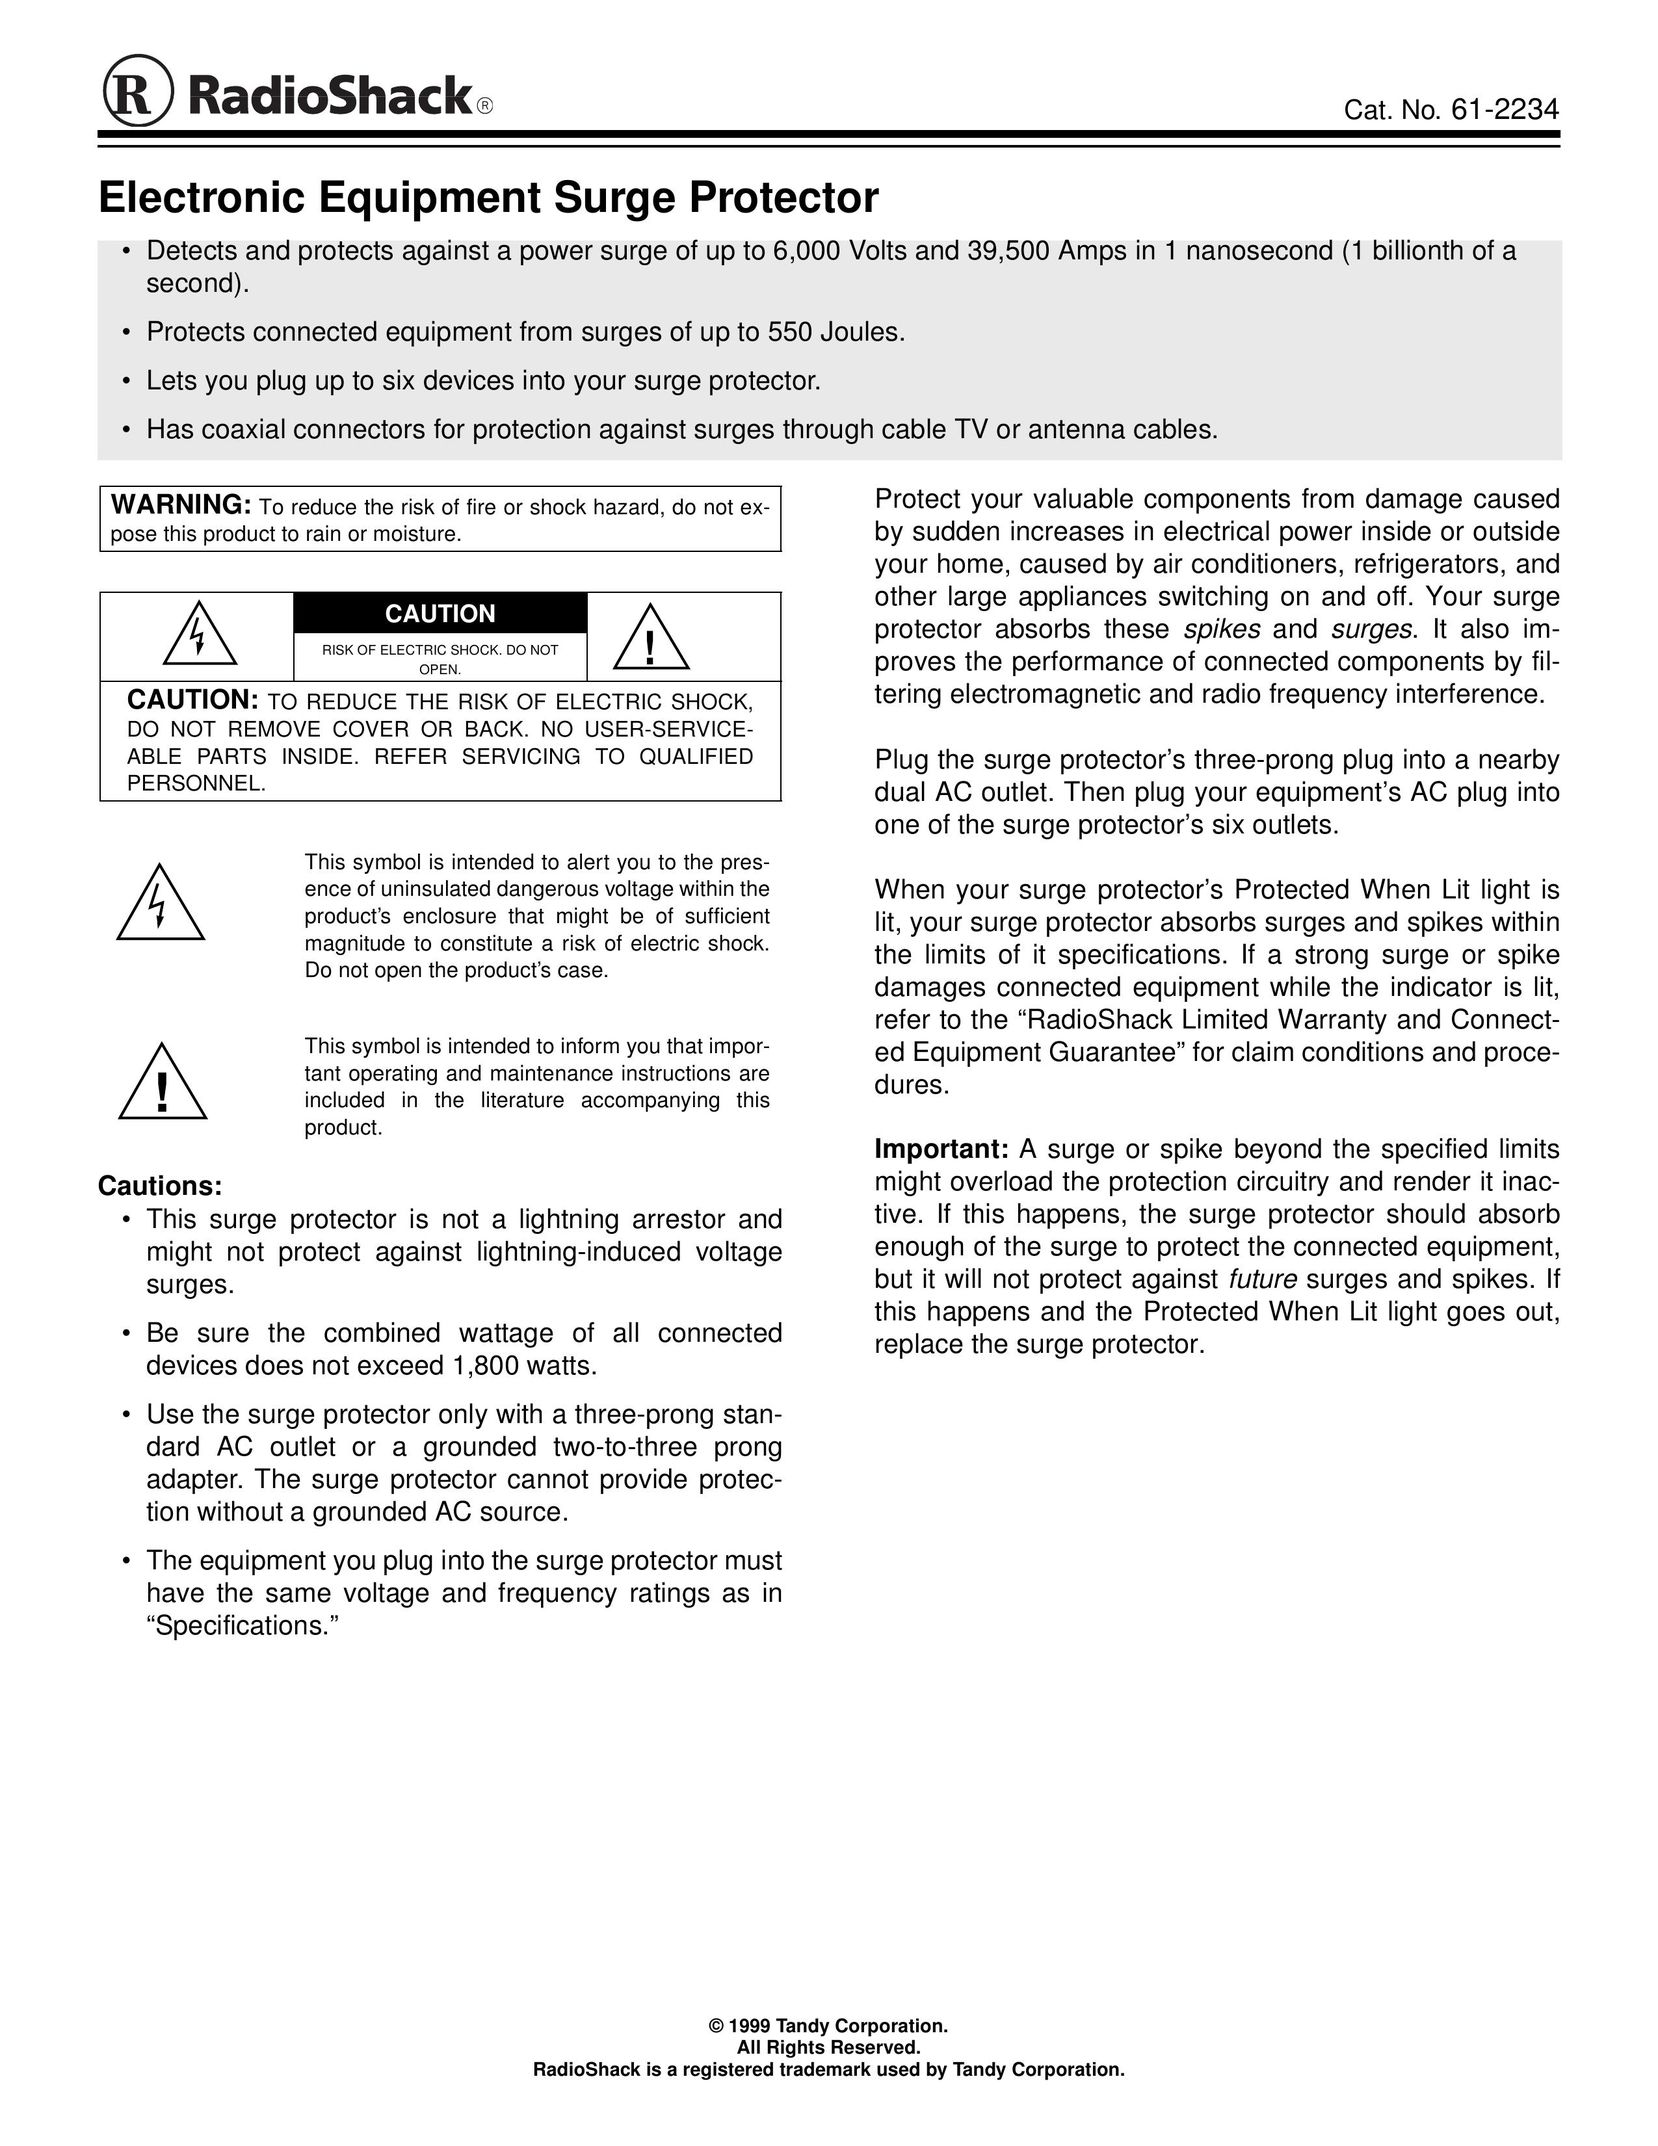 Radio Shack 61-2234 Surge Protector User Manual